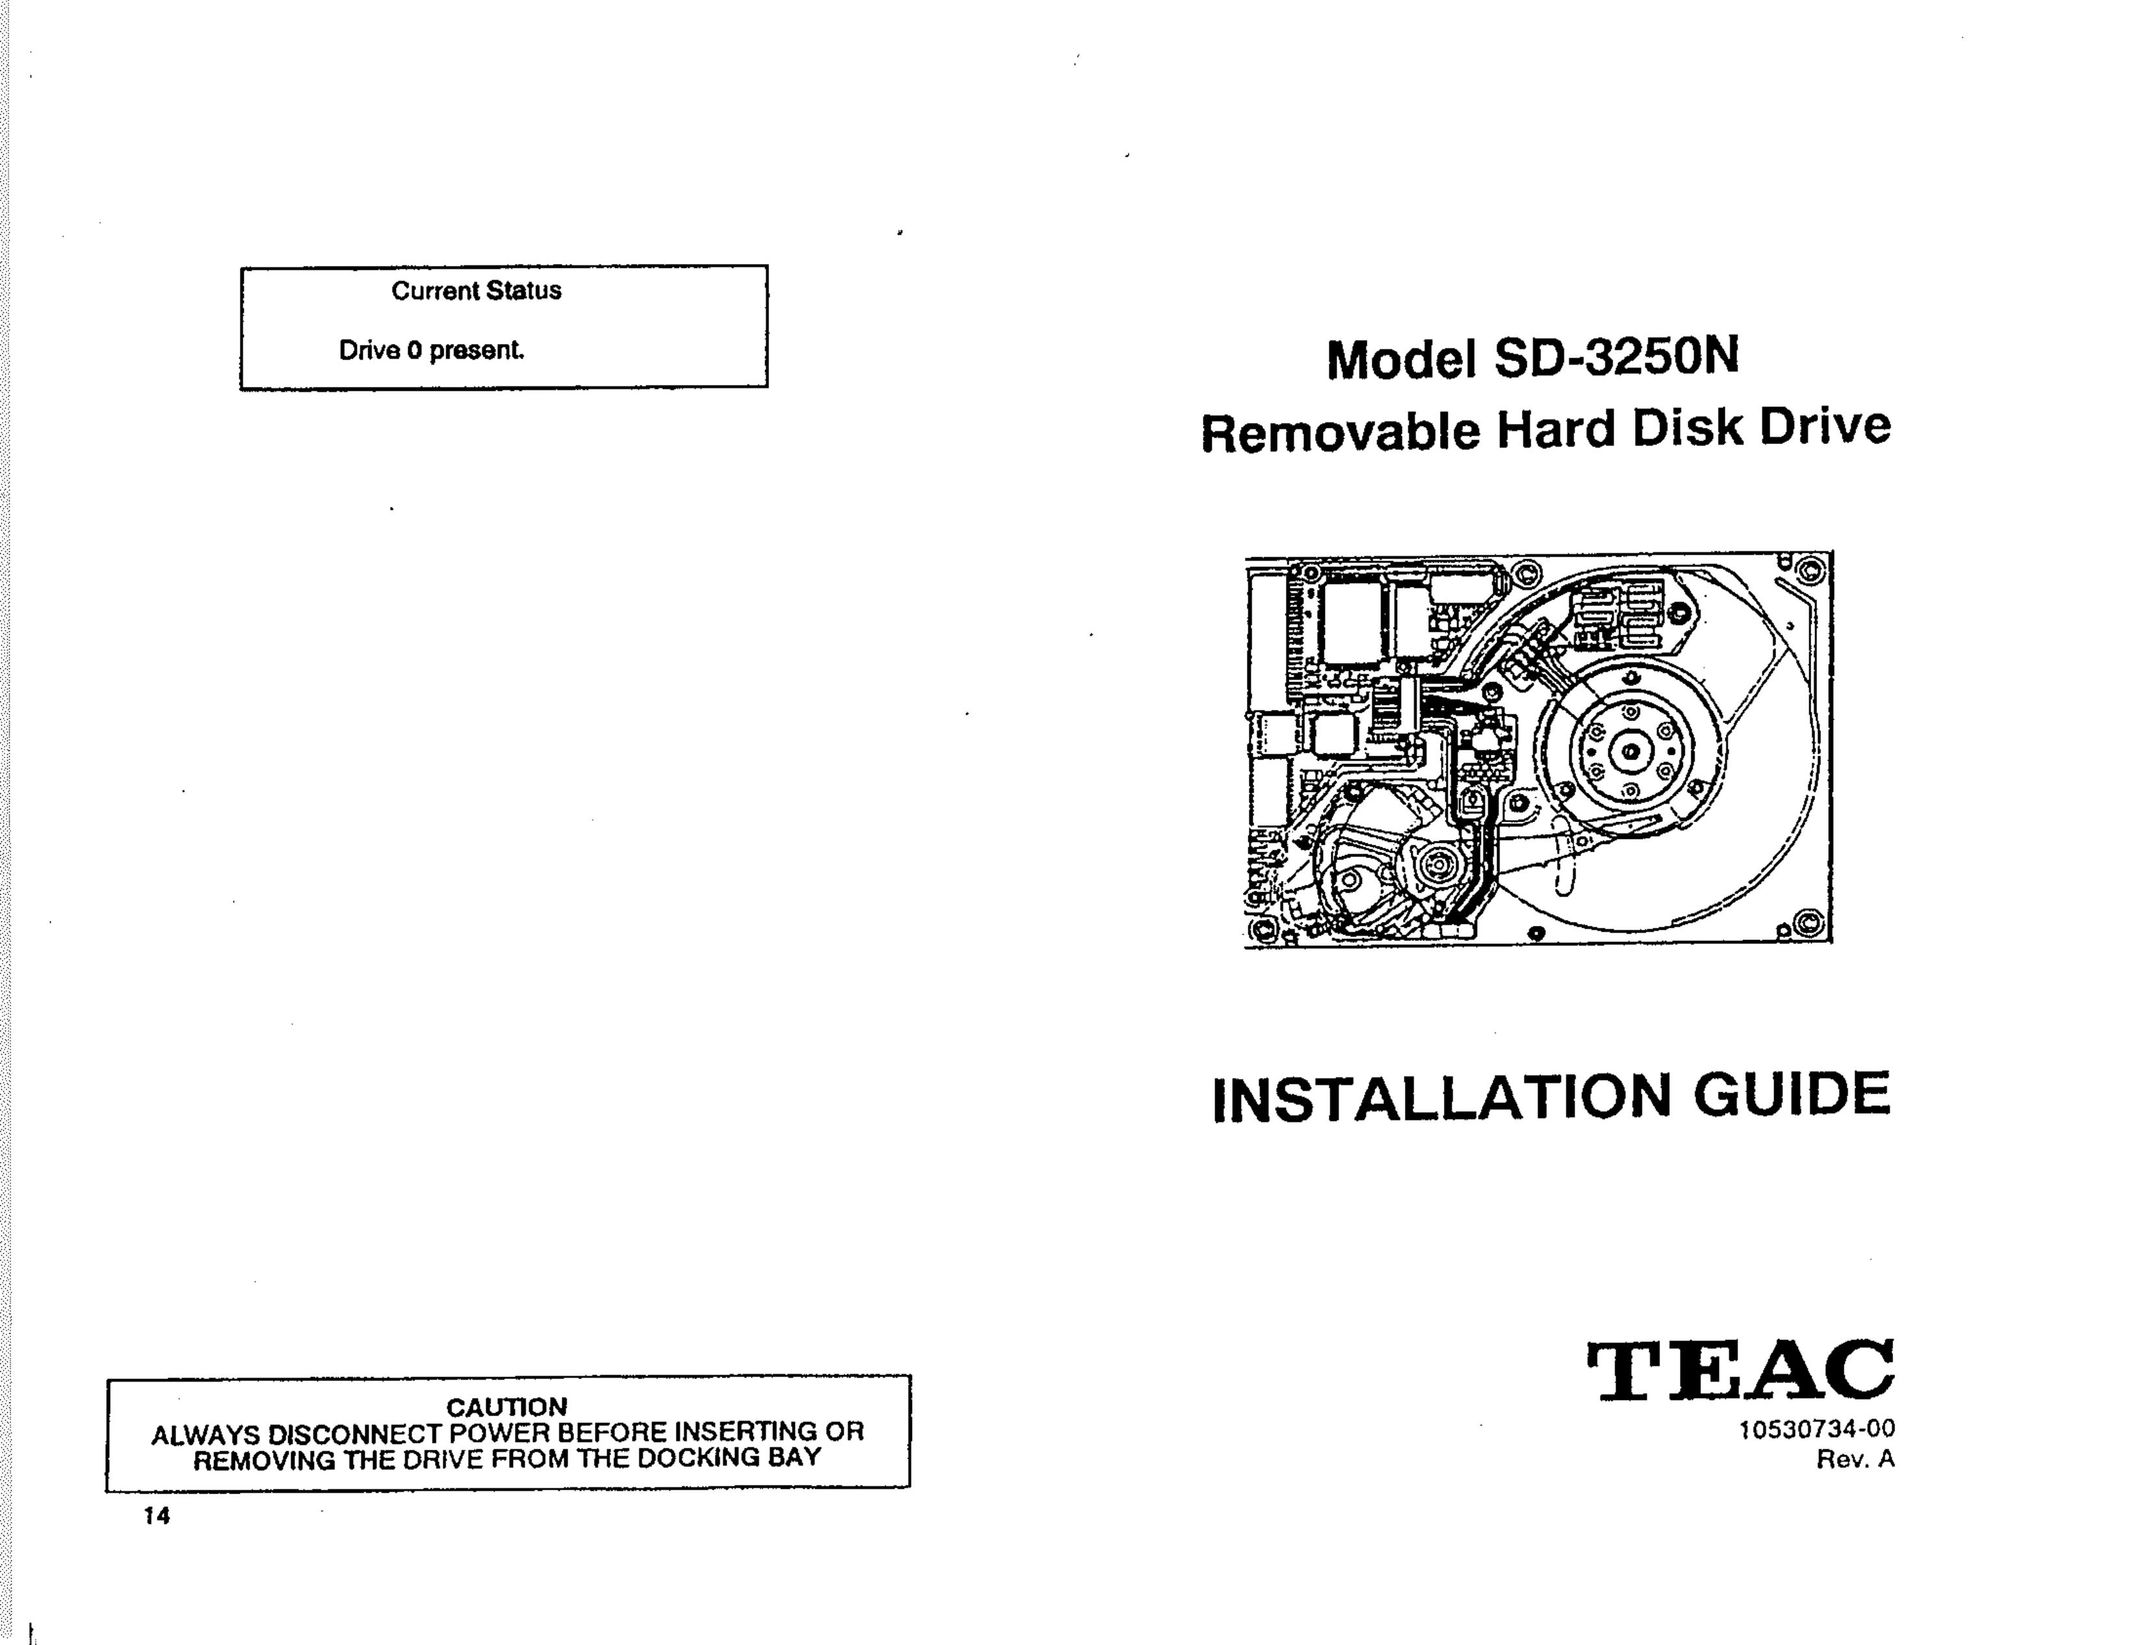 Teac SD-3250N Computer Drive User Manual